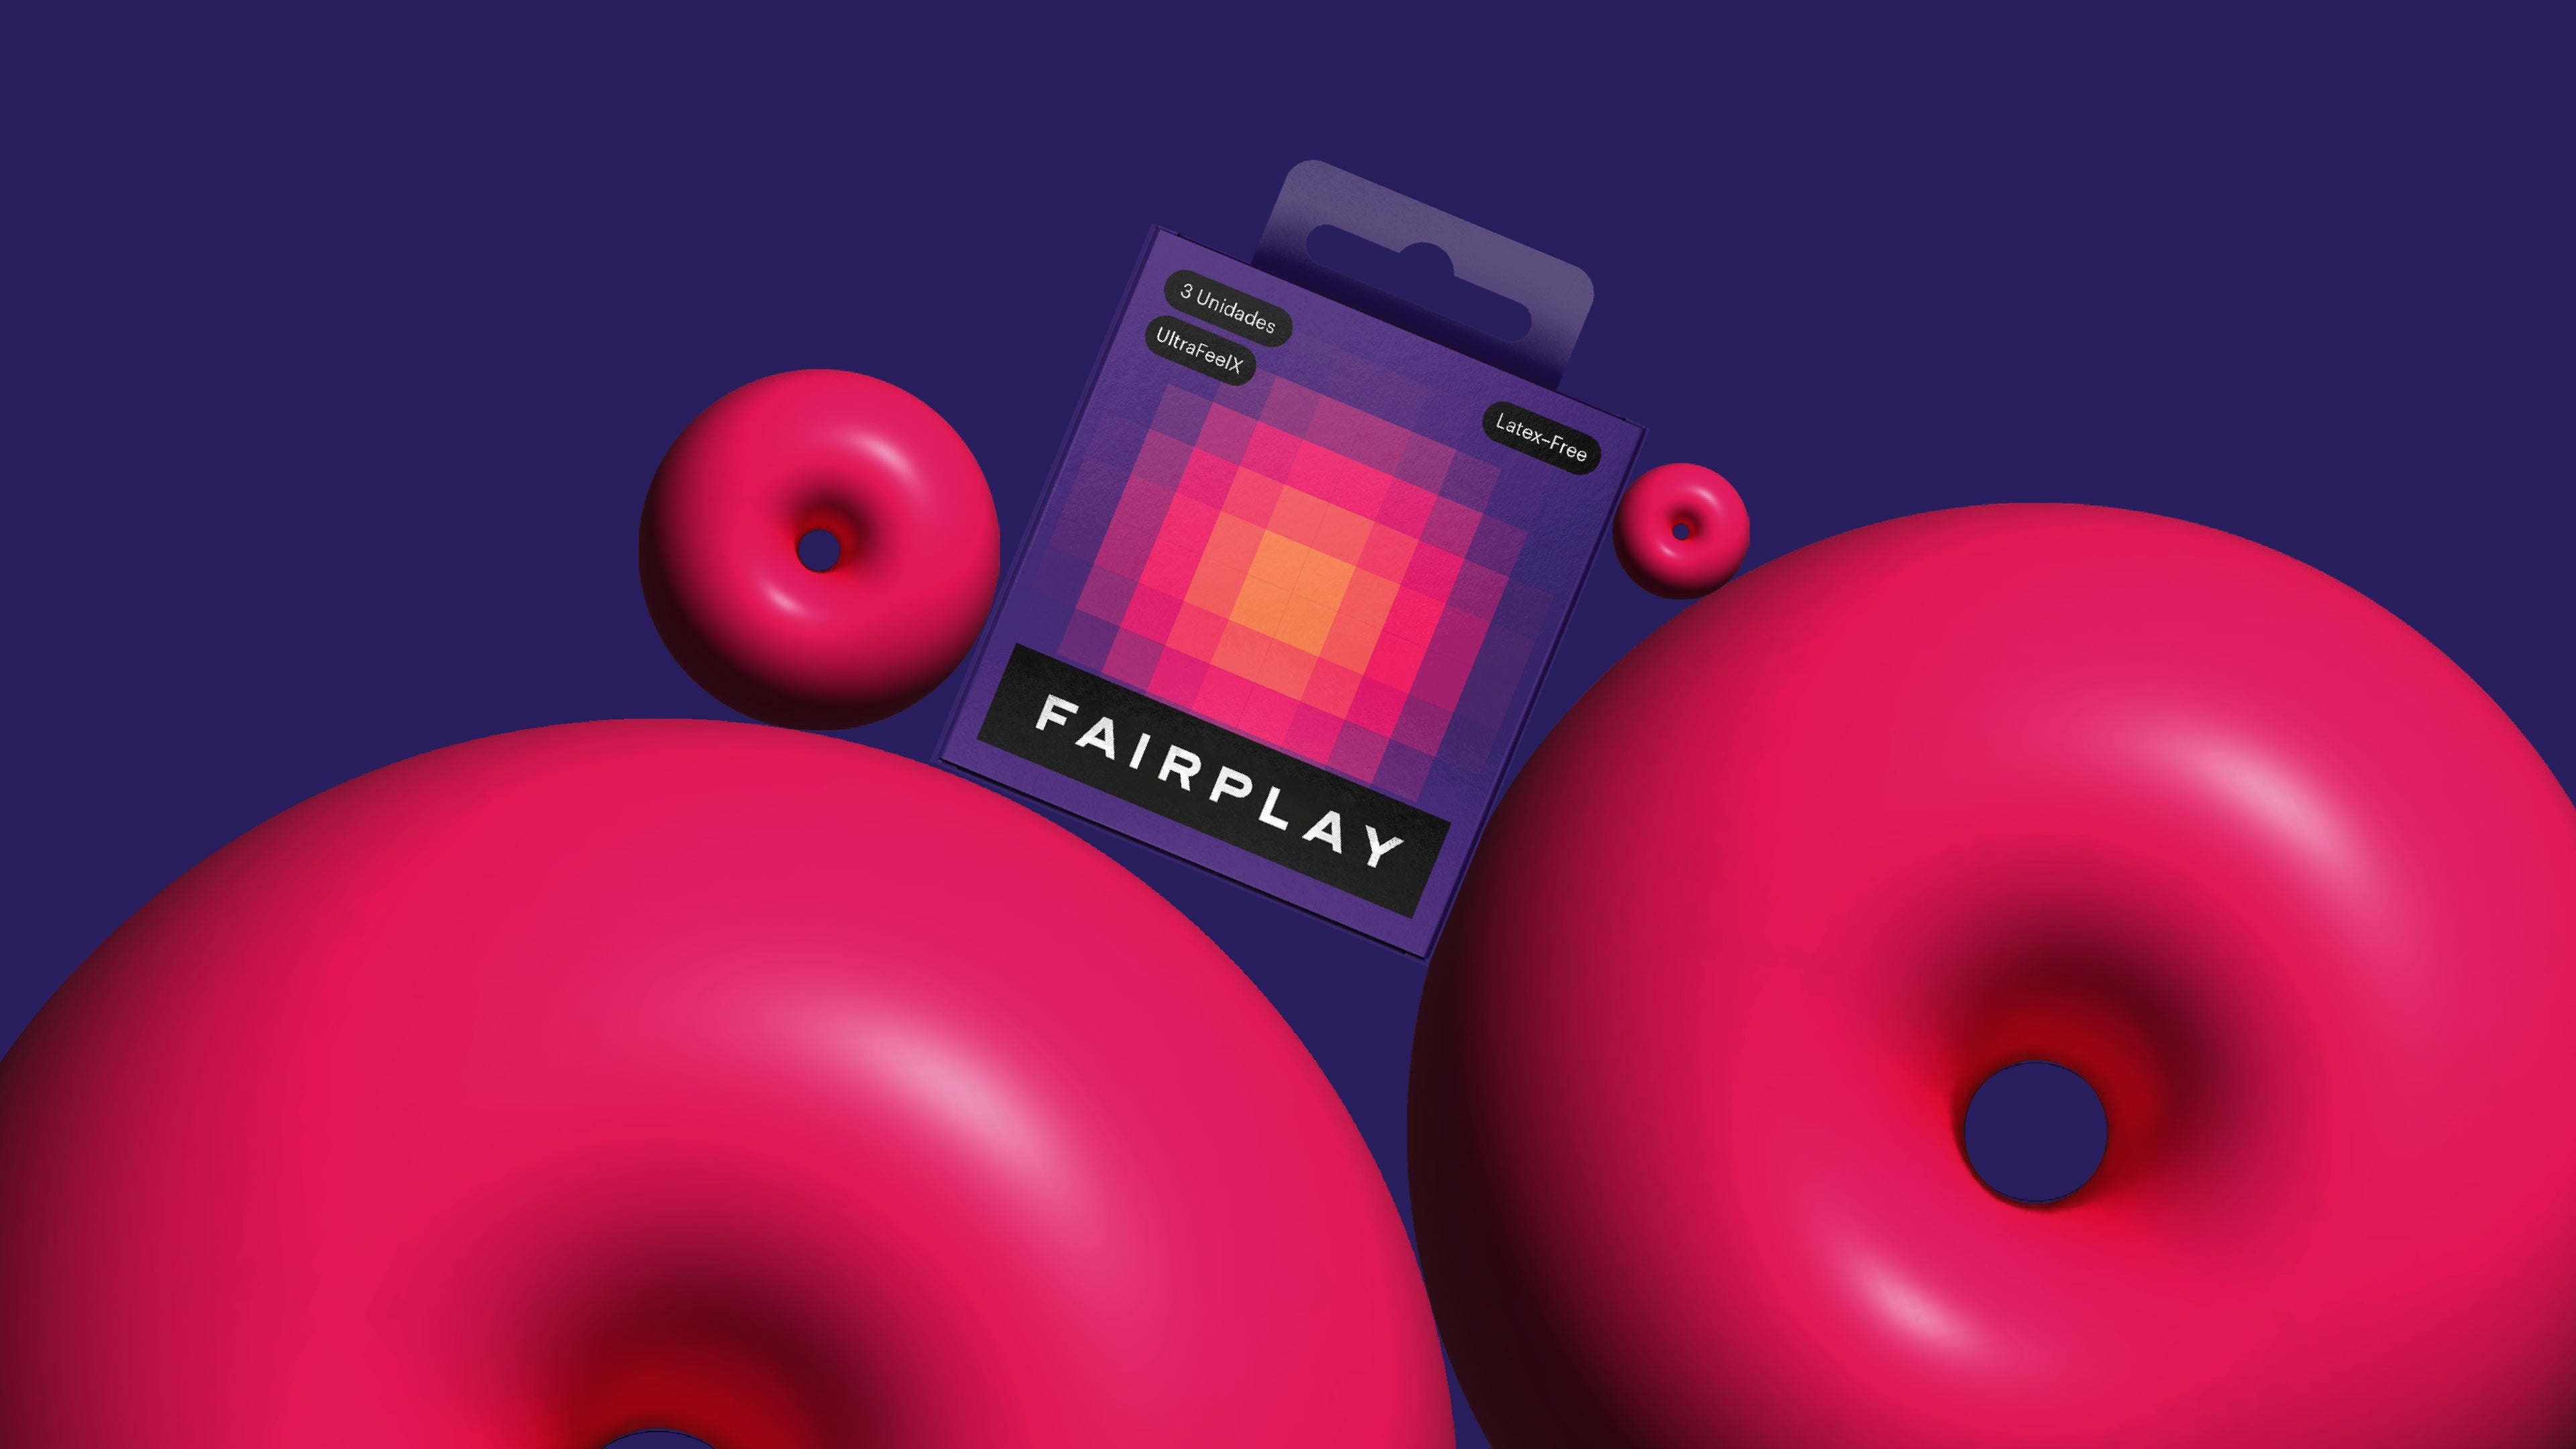 Fairplay empaque branding